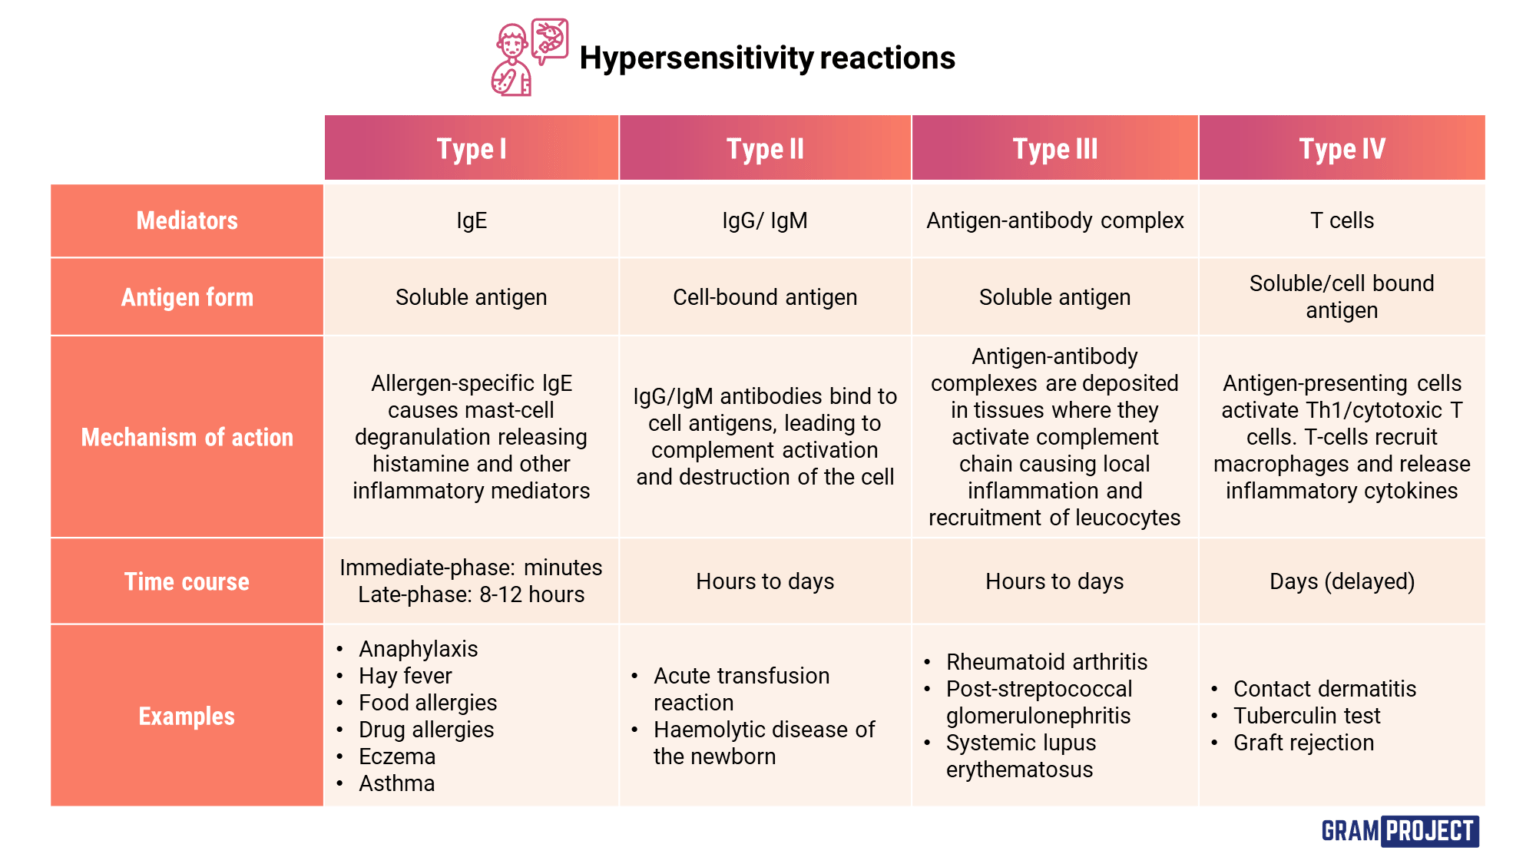 Hypersensitivity reactions table